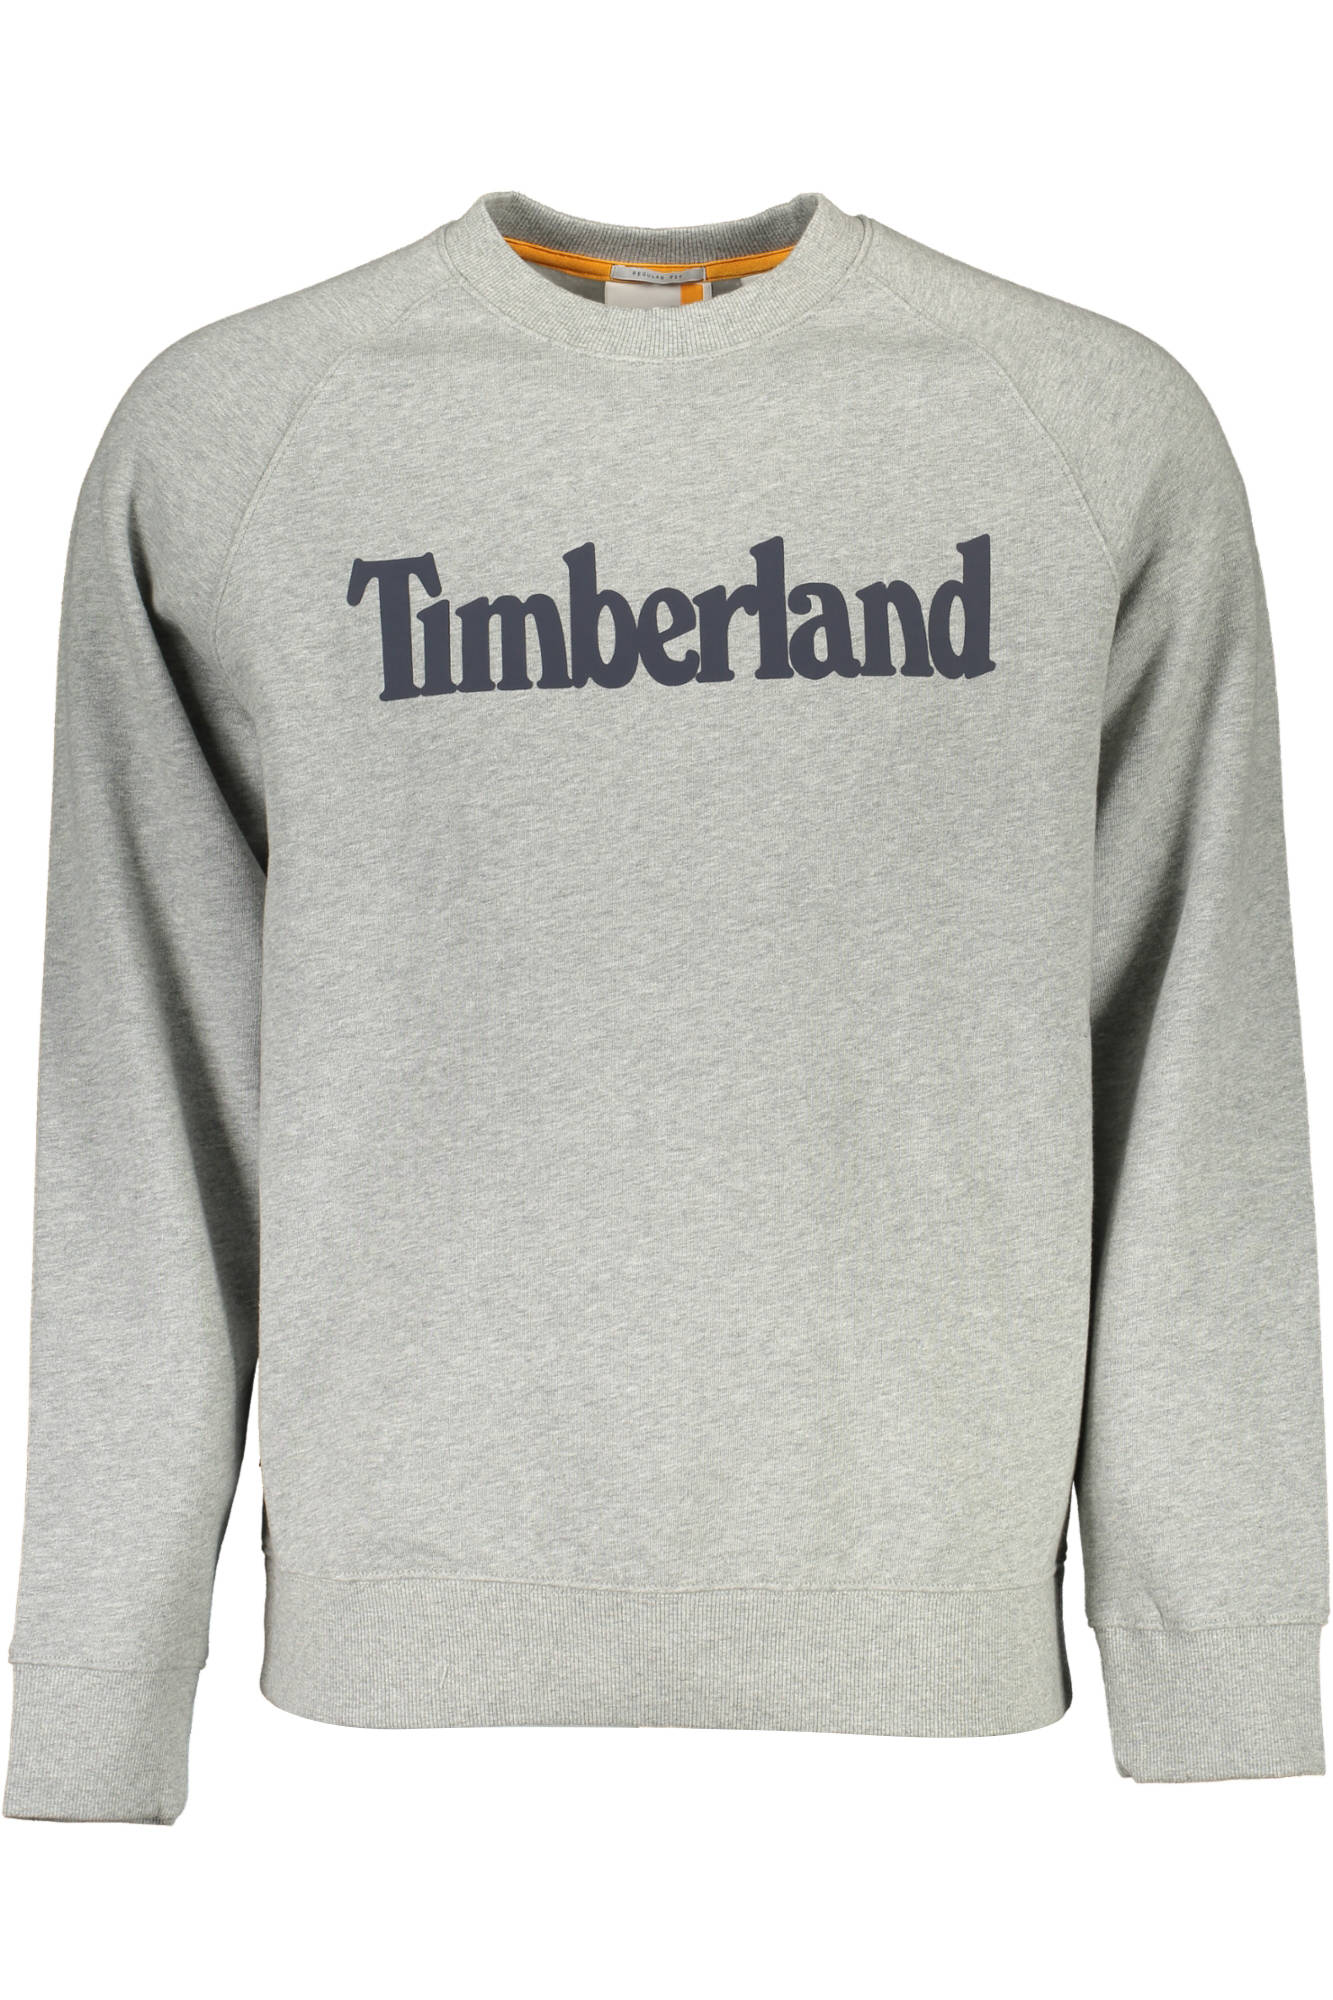 Timberland Gray Sweater - Fizigo